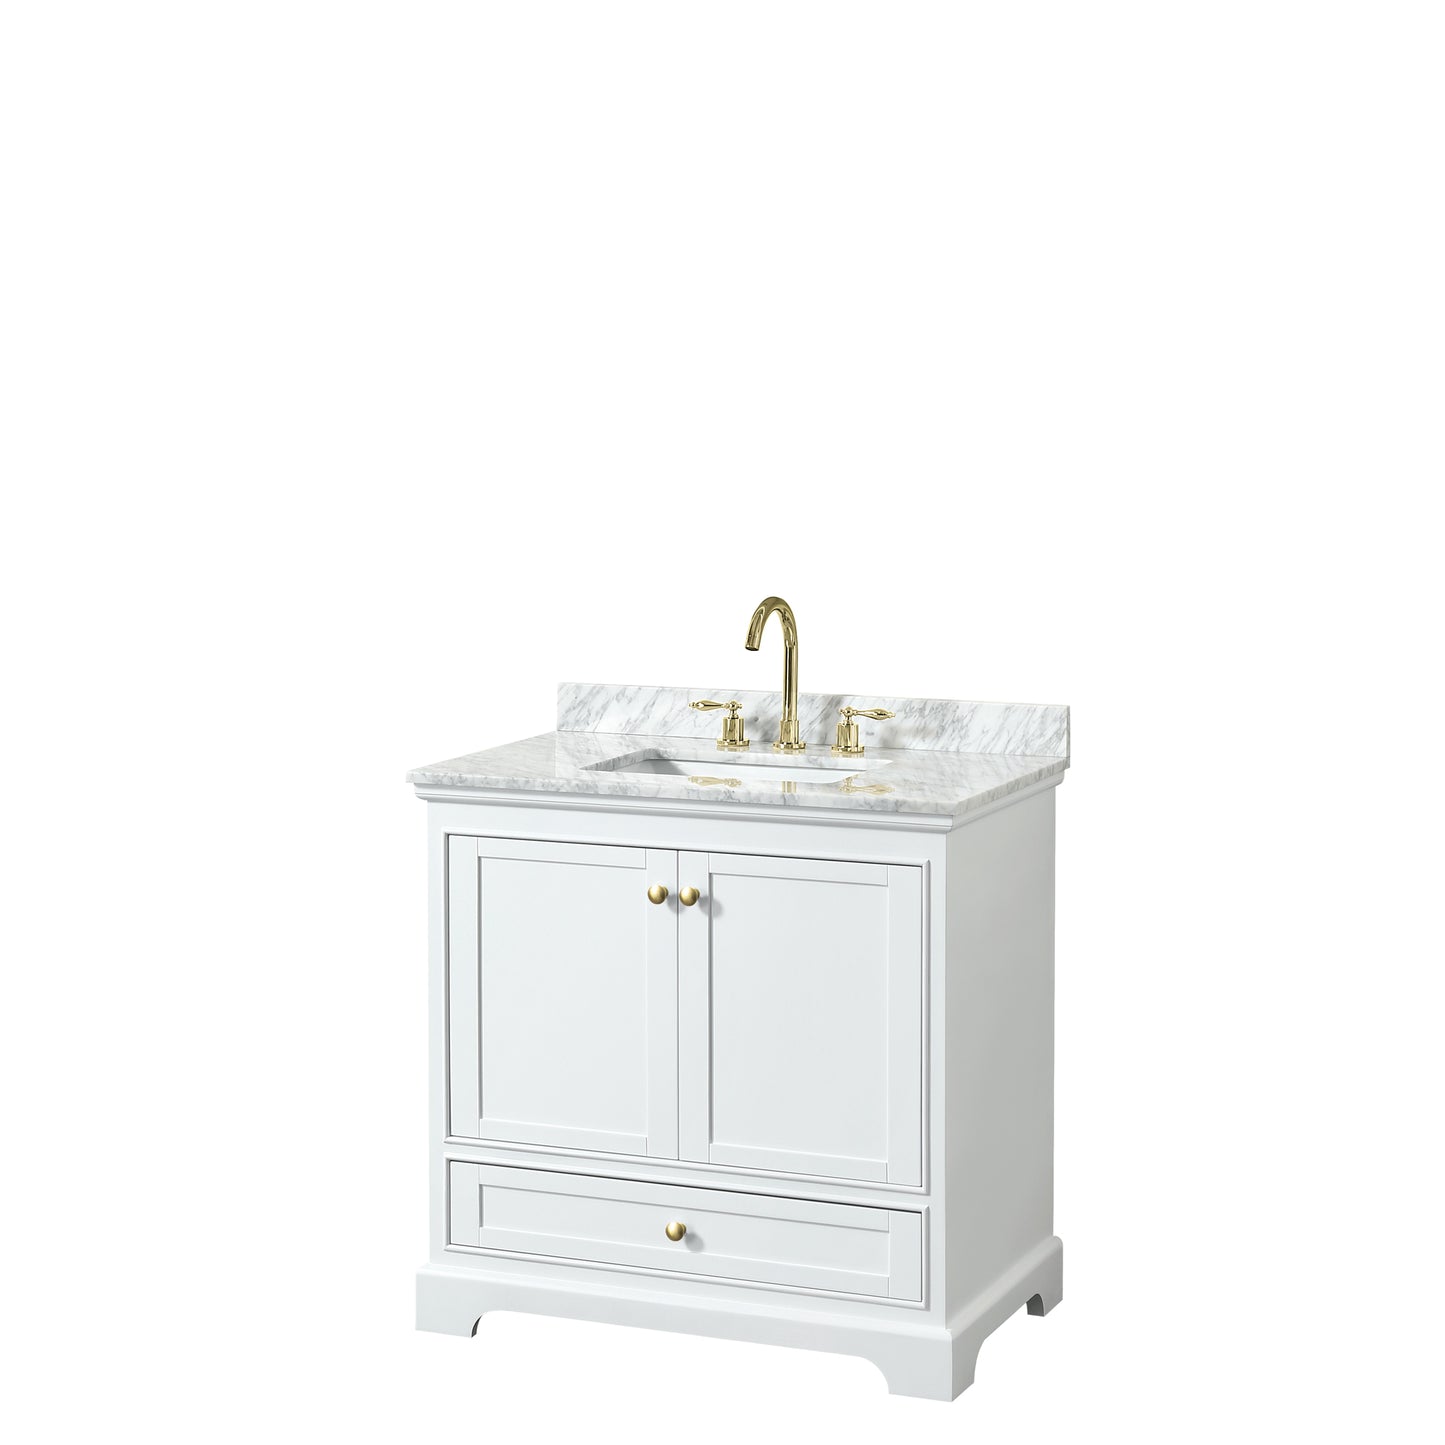 Wyndham Collection Deborah 36 Inch Single Bathroom Vanity in White, White Carrara Marble Countertop, Undermount Square Sink, Brushed Gold Trim - Luxe Bathroom Vanities